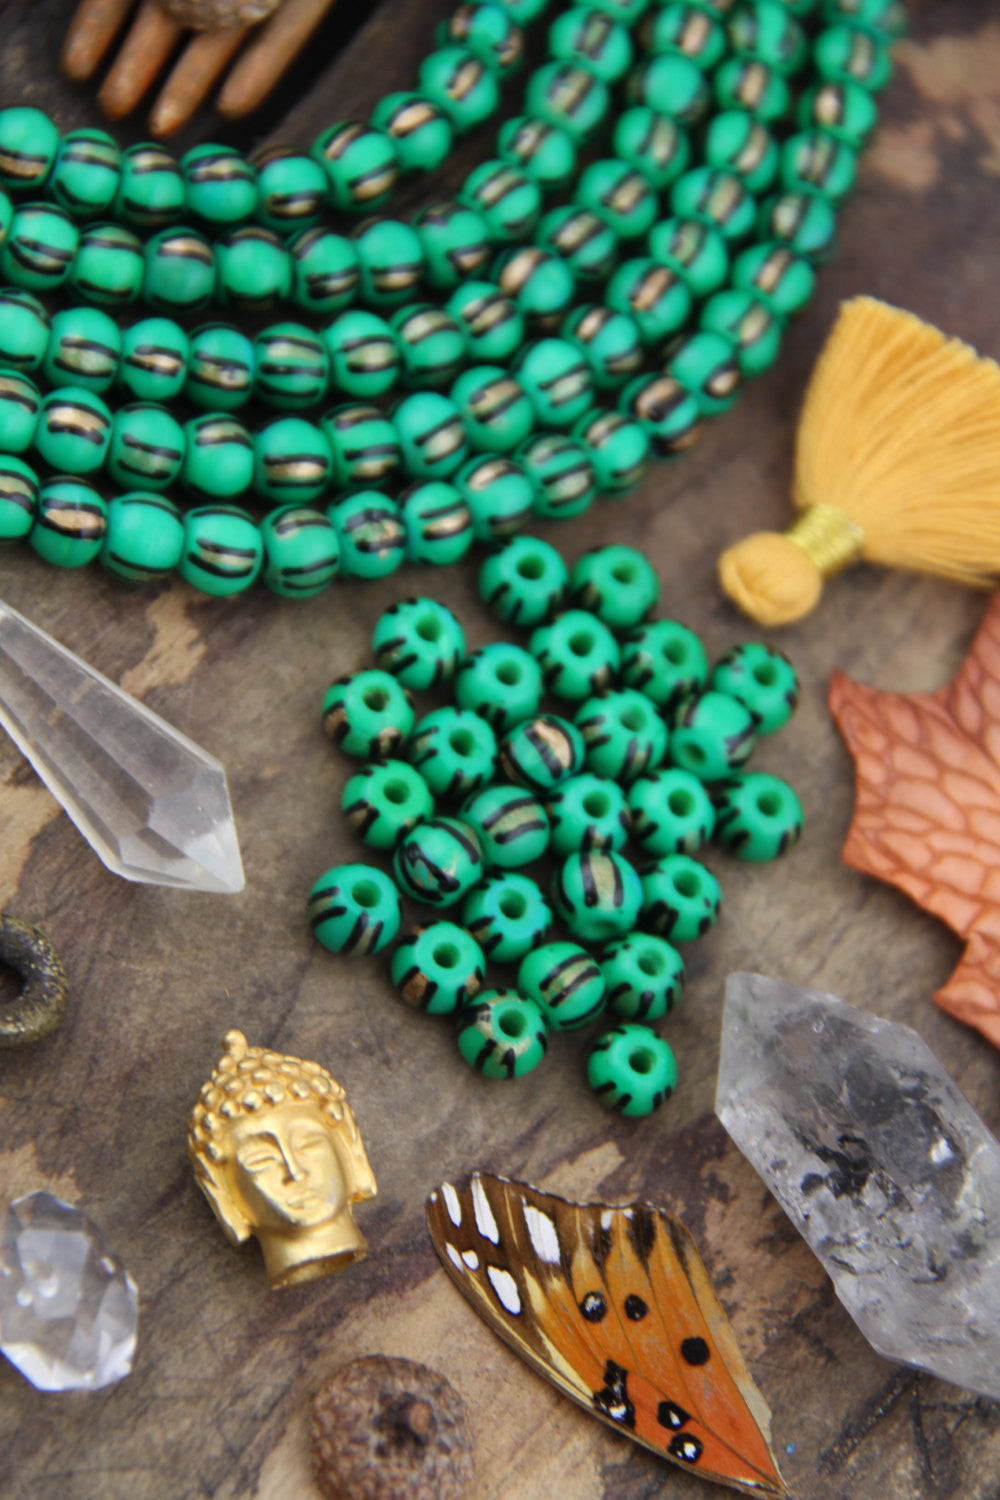 Golden Watermelon: Painted Green, Black & Gold Bone Beads, 6x8mm, 31 pieces - ShopWomanShopsWorld.com. Bone Beads, Tassels, Pom Poms, African Beads.